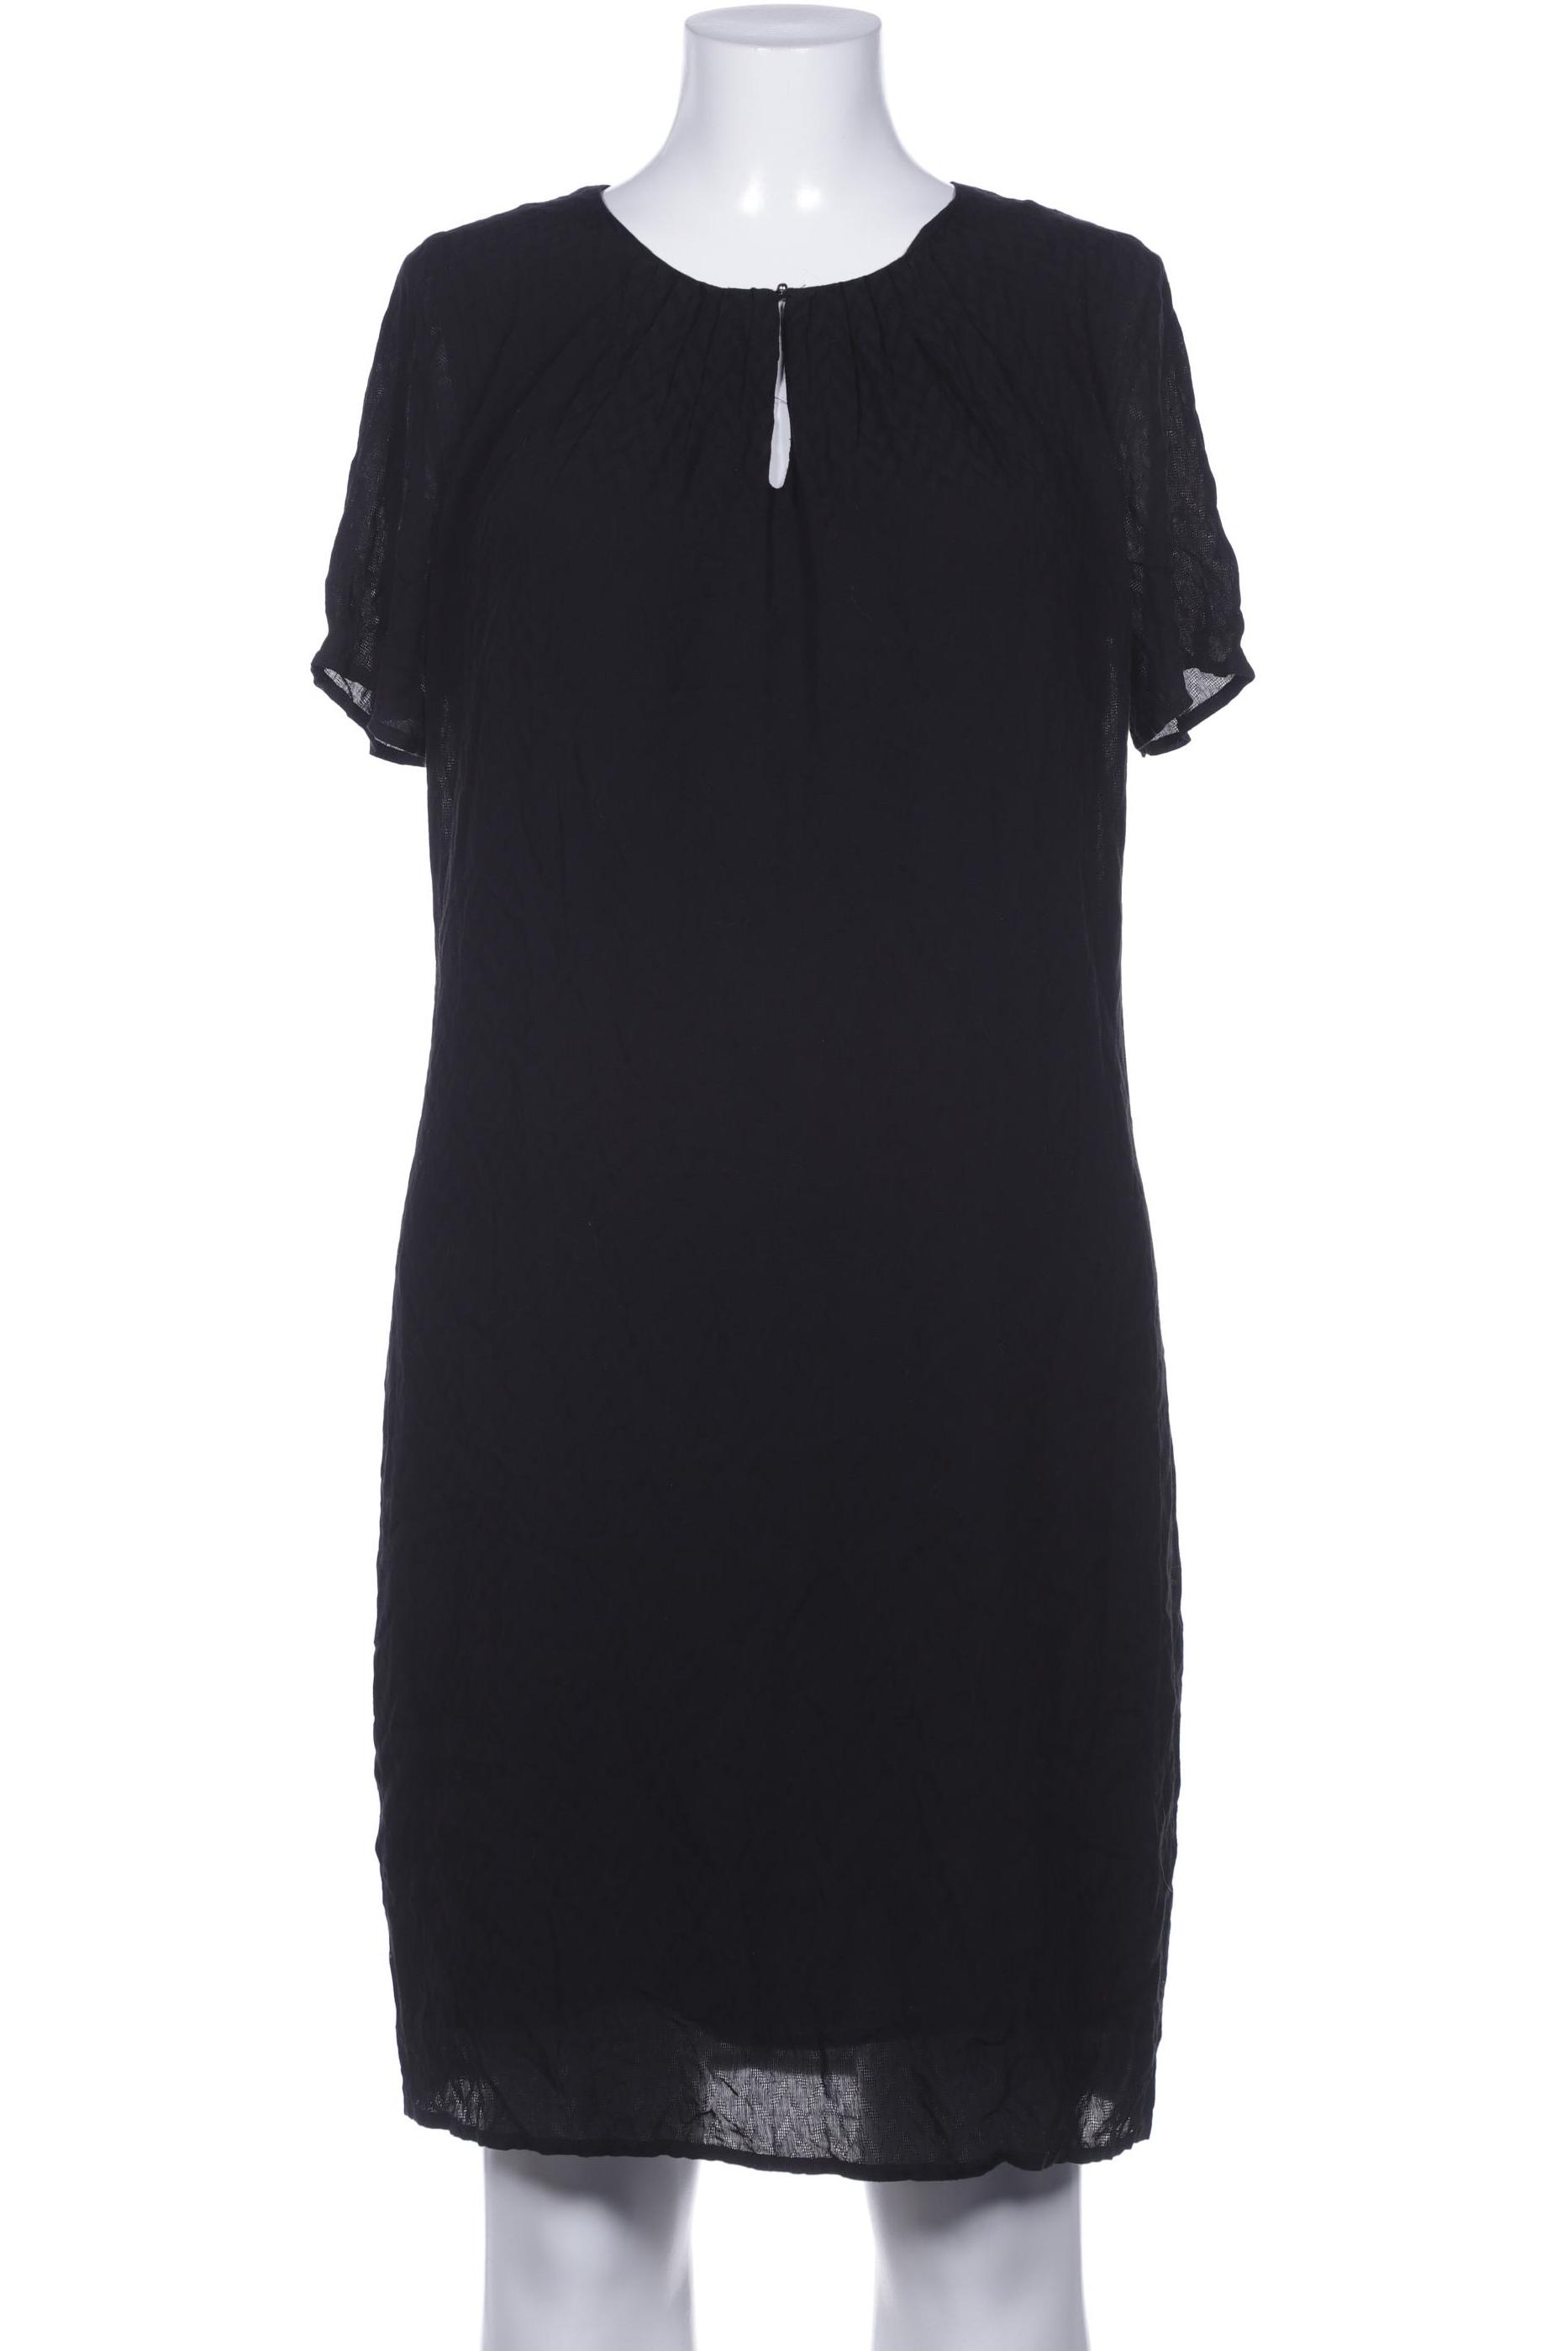 Rosemunde Damen Kleid, schwarz, Gr. 42 von Rosemunde